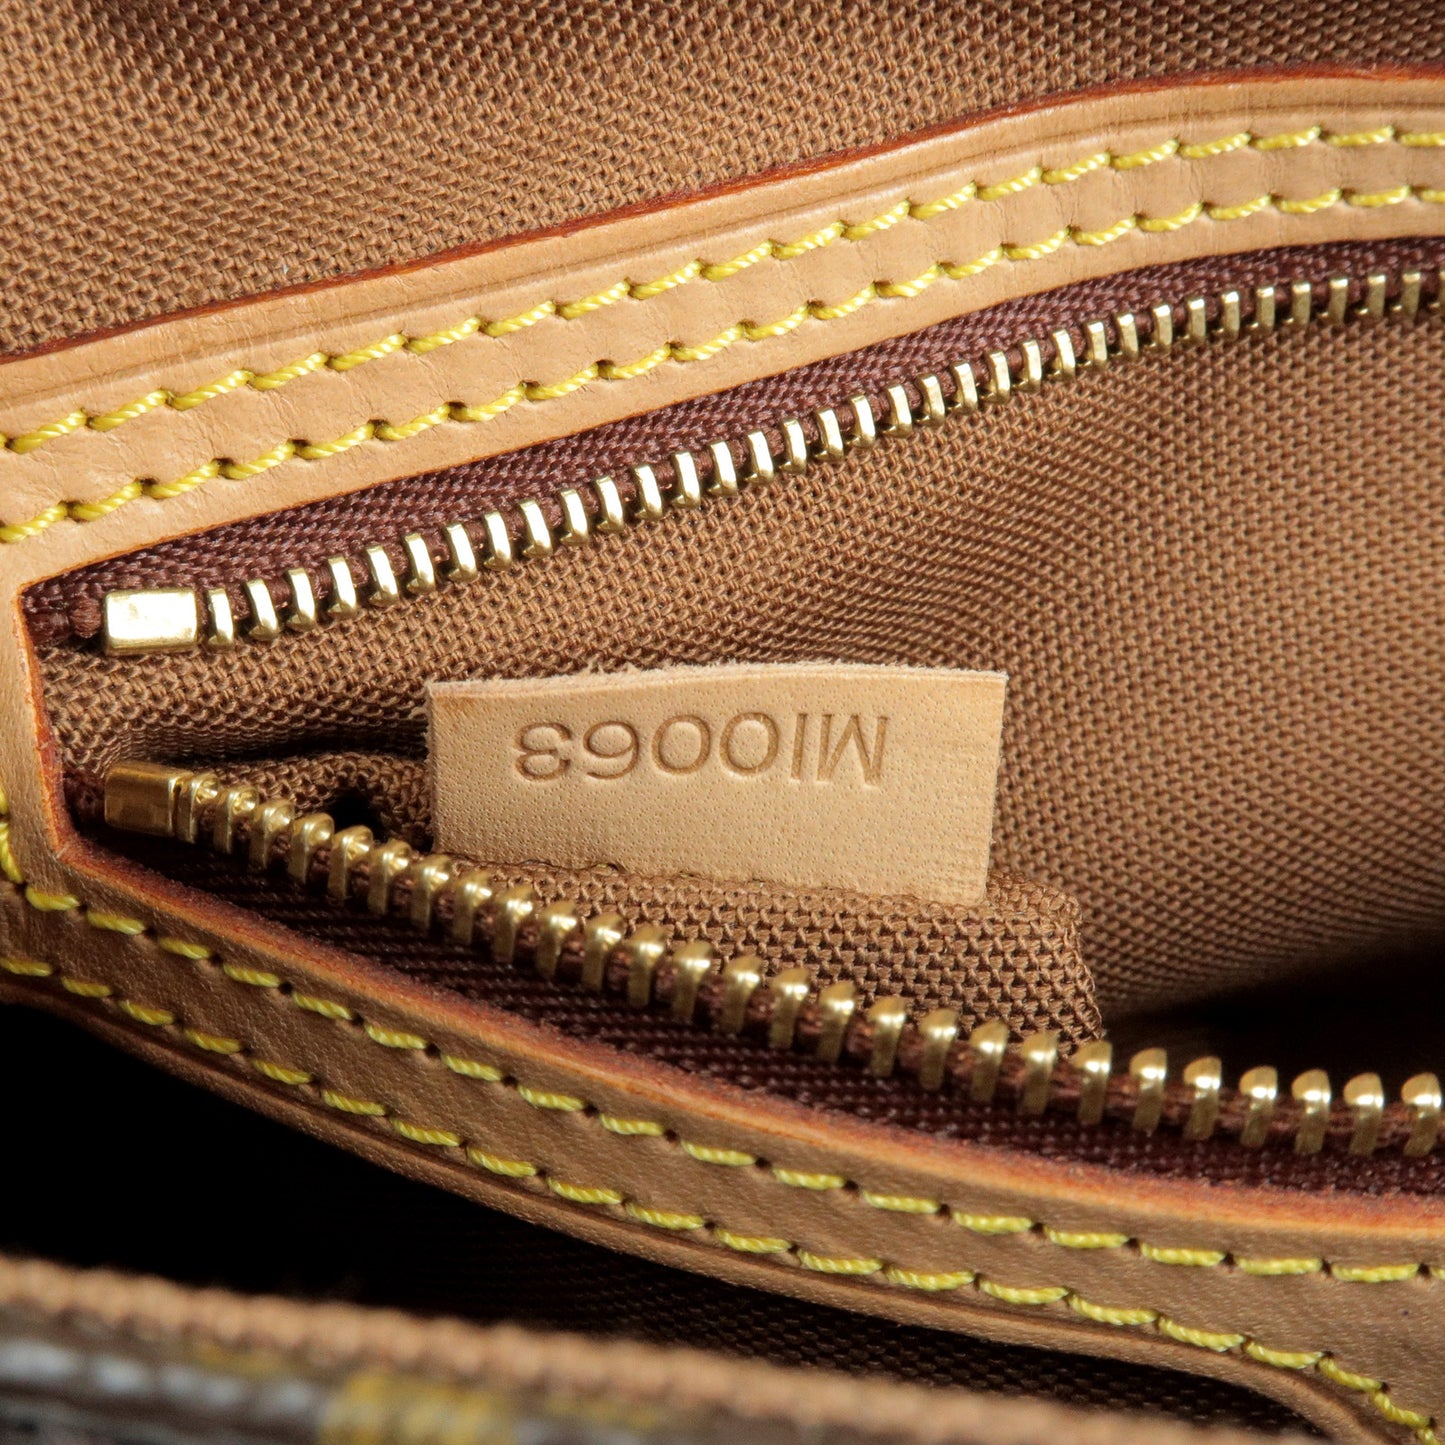 Louis-Vuitton-Monogram-Mini-Looping-Shoulder-Bag-M51147